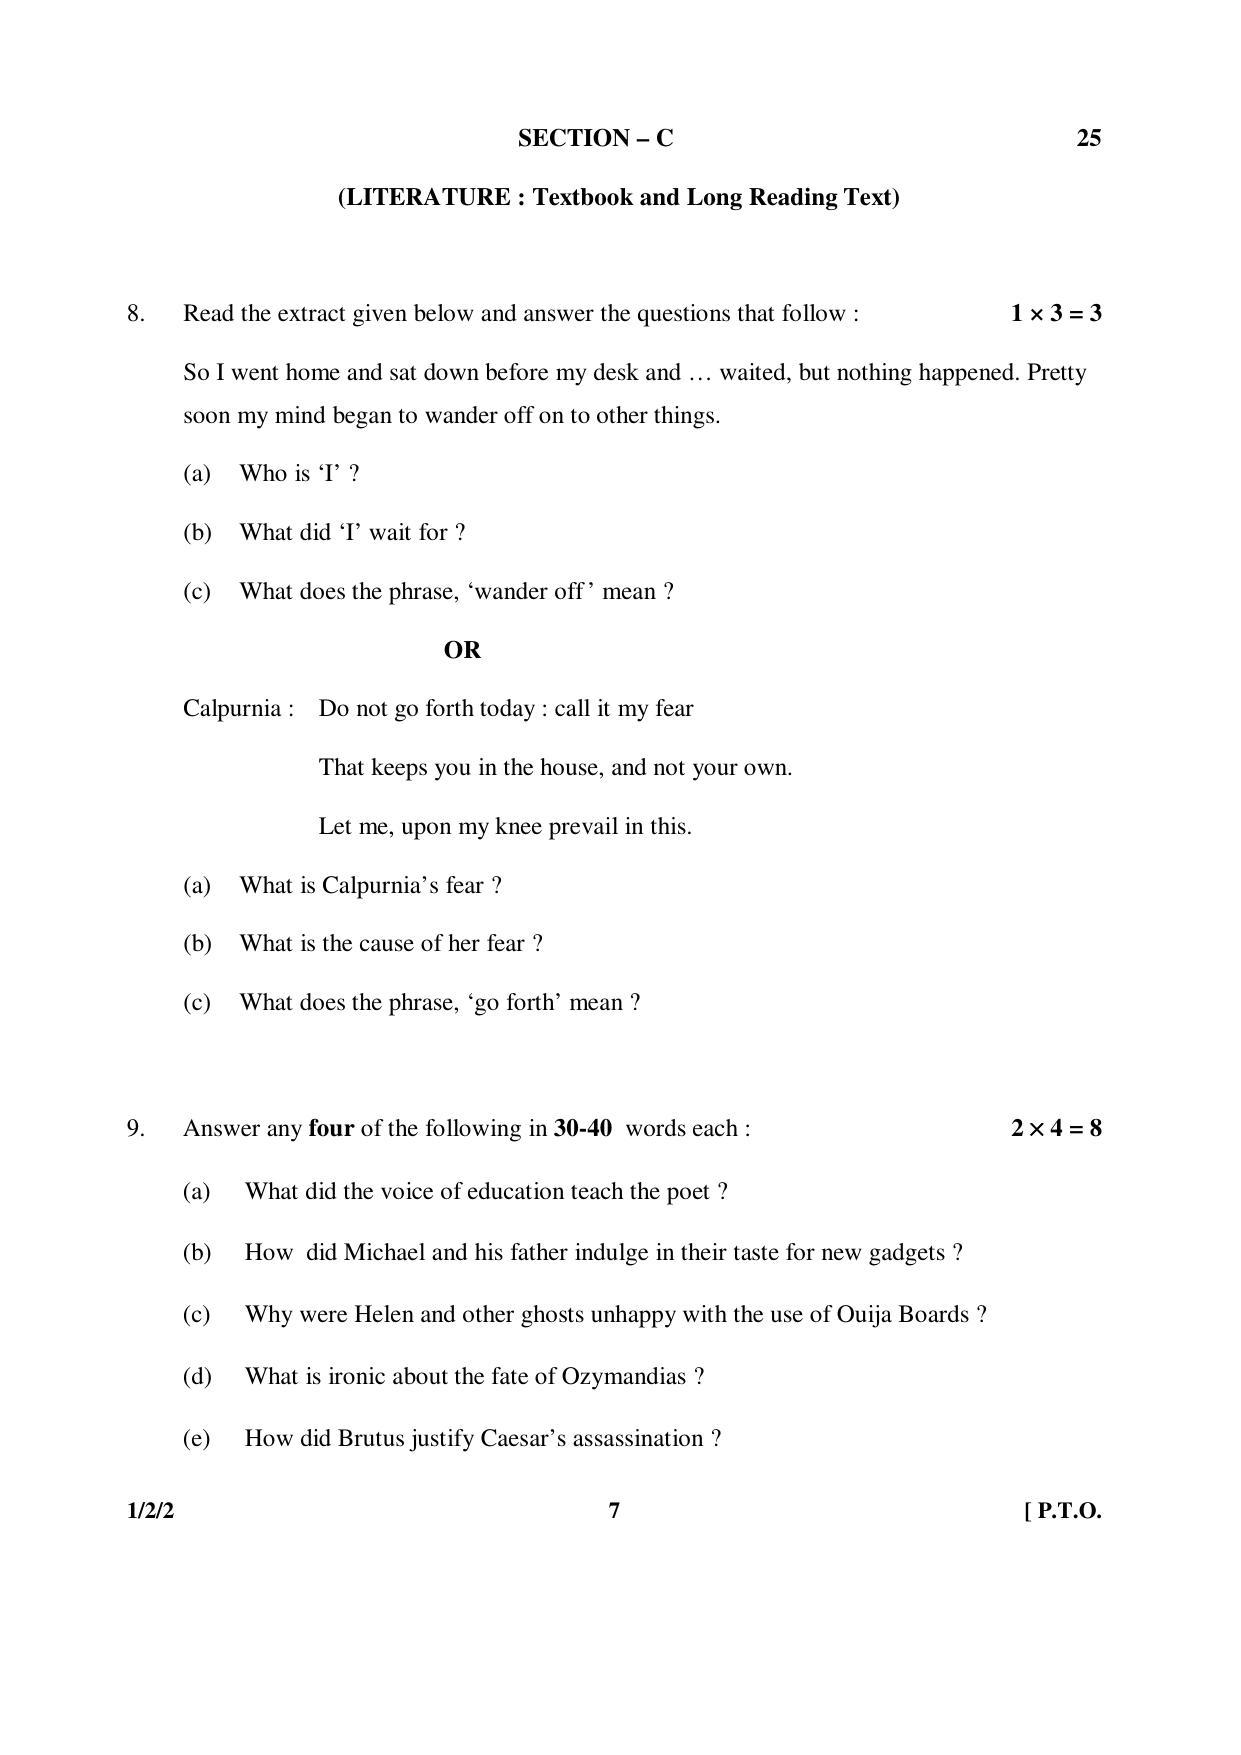 CBSE Class 10 1-2-2 ENGLISH COMMUNICATIVE 2016 Question Paper - Page 7